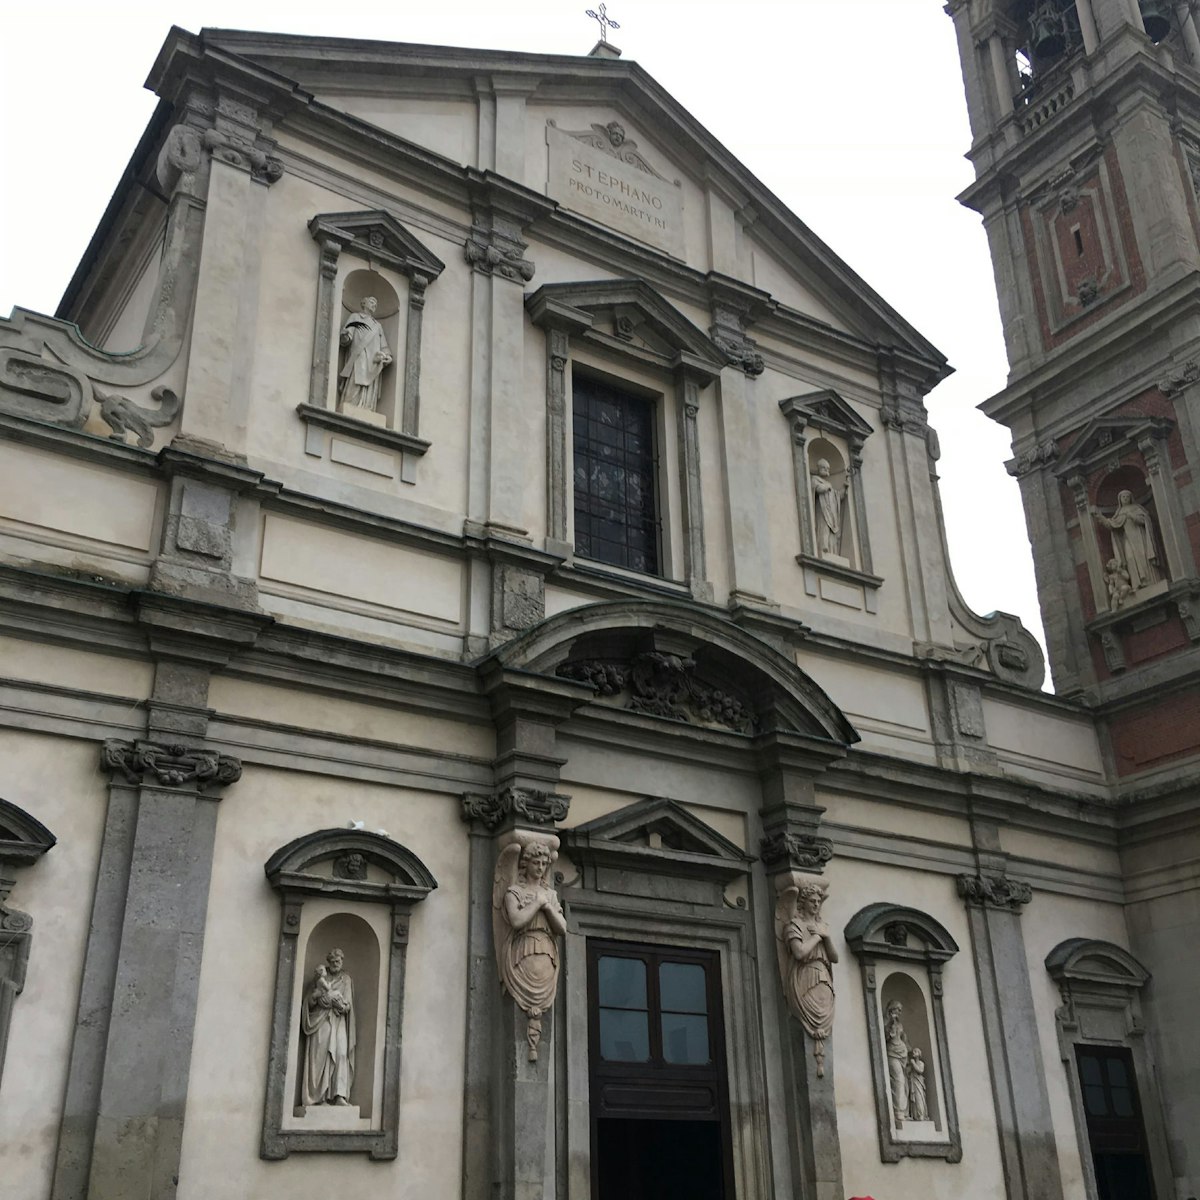 Entrance to the Chiesa di San Bernardino alle Ossa